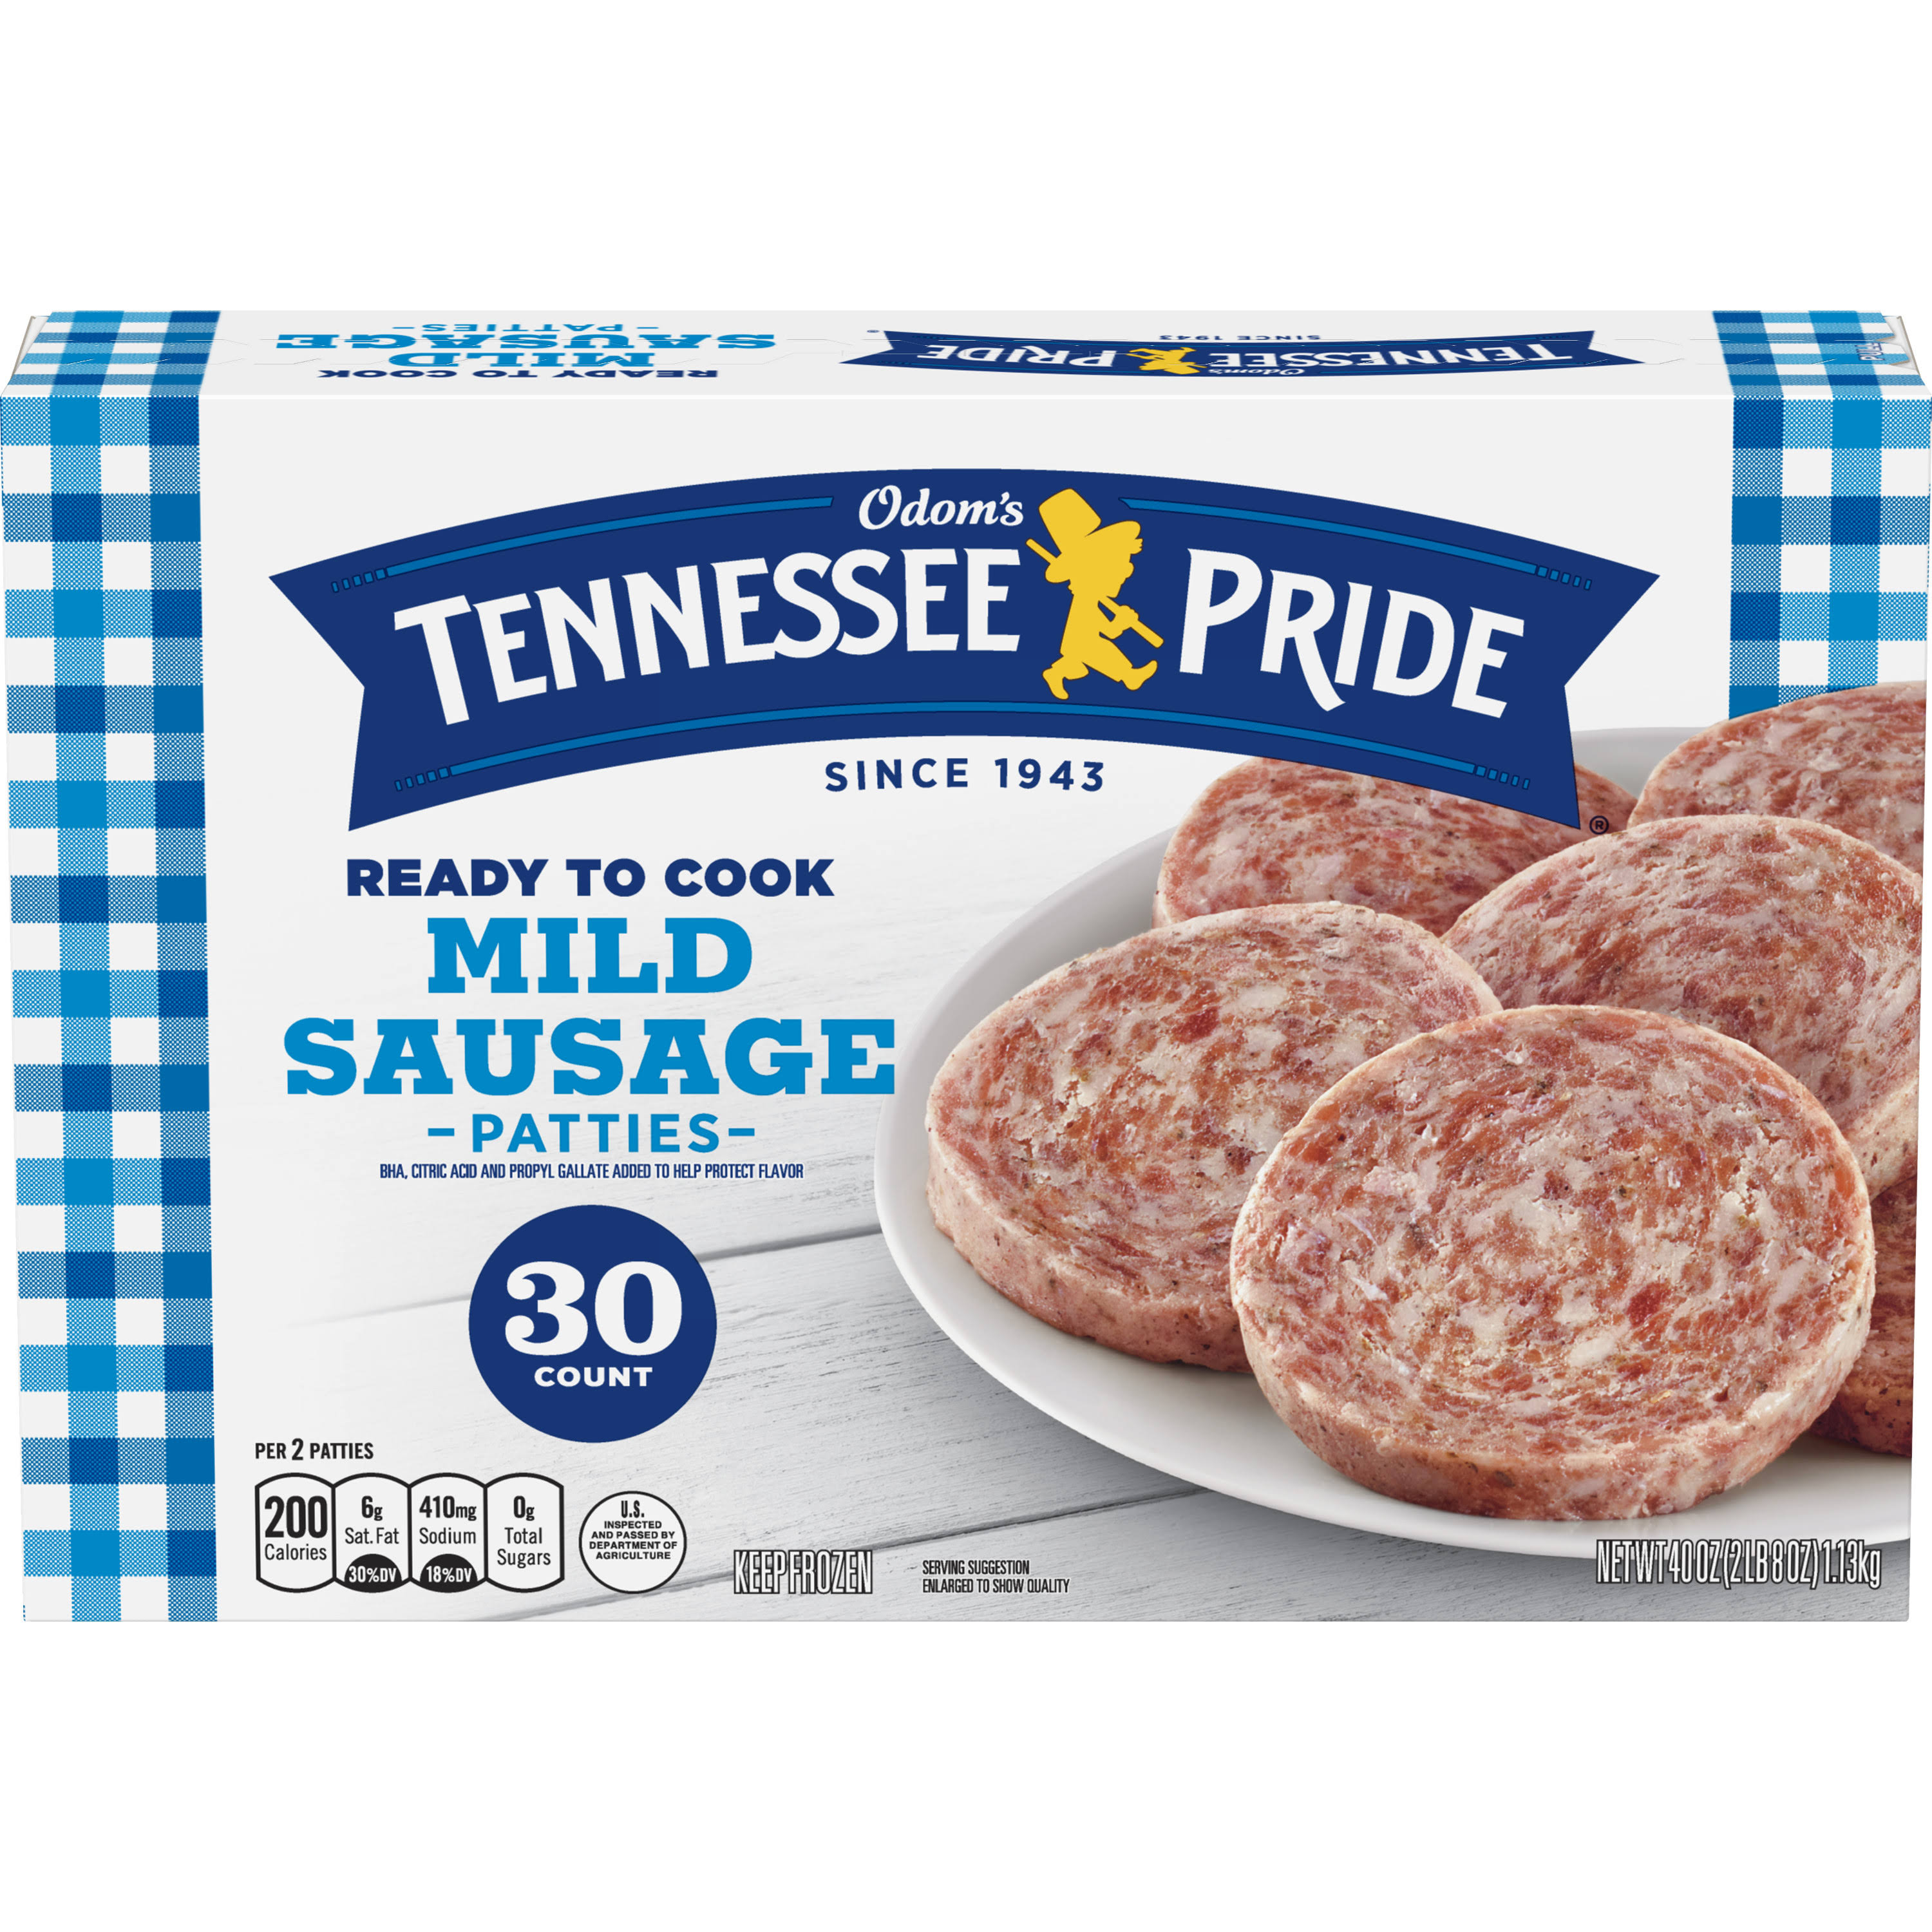 Tennessee Pride Patties, Sausage, Mild - 30 pack, 40 oz